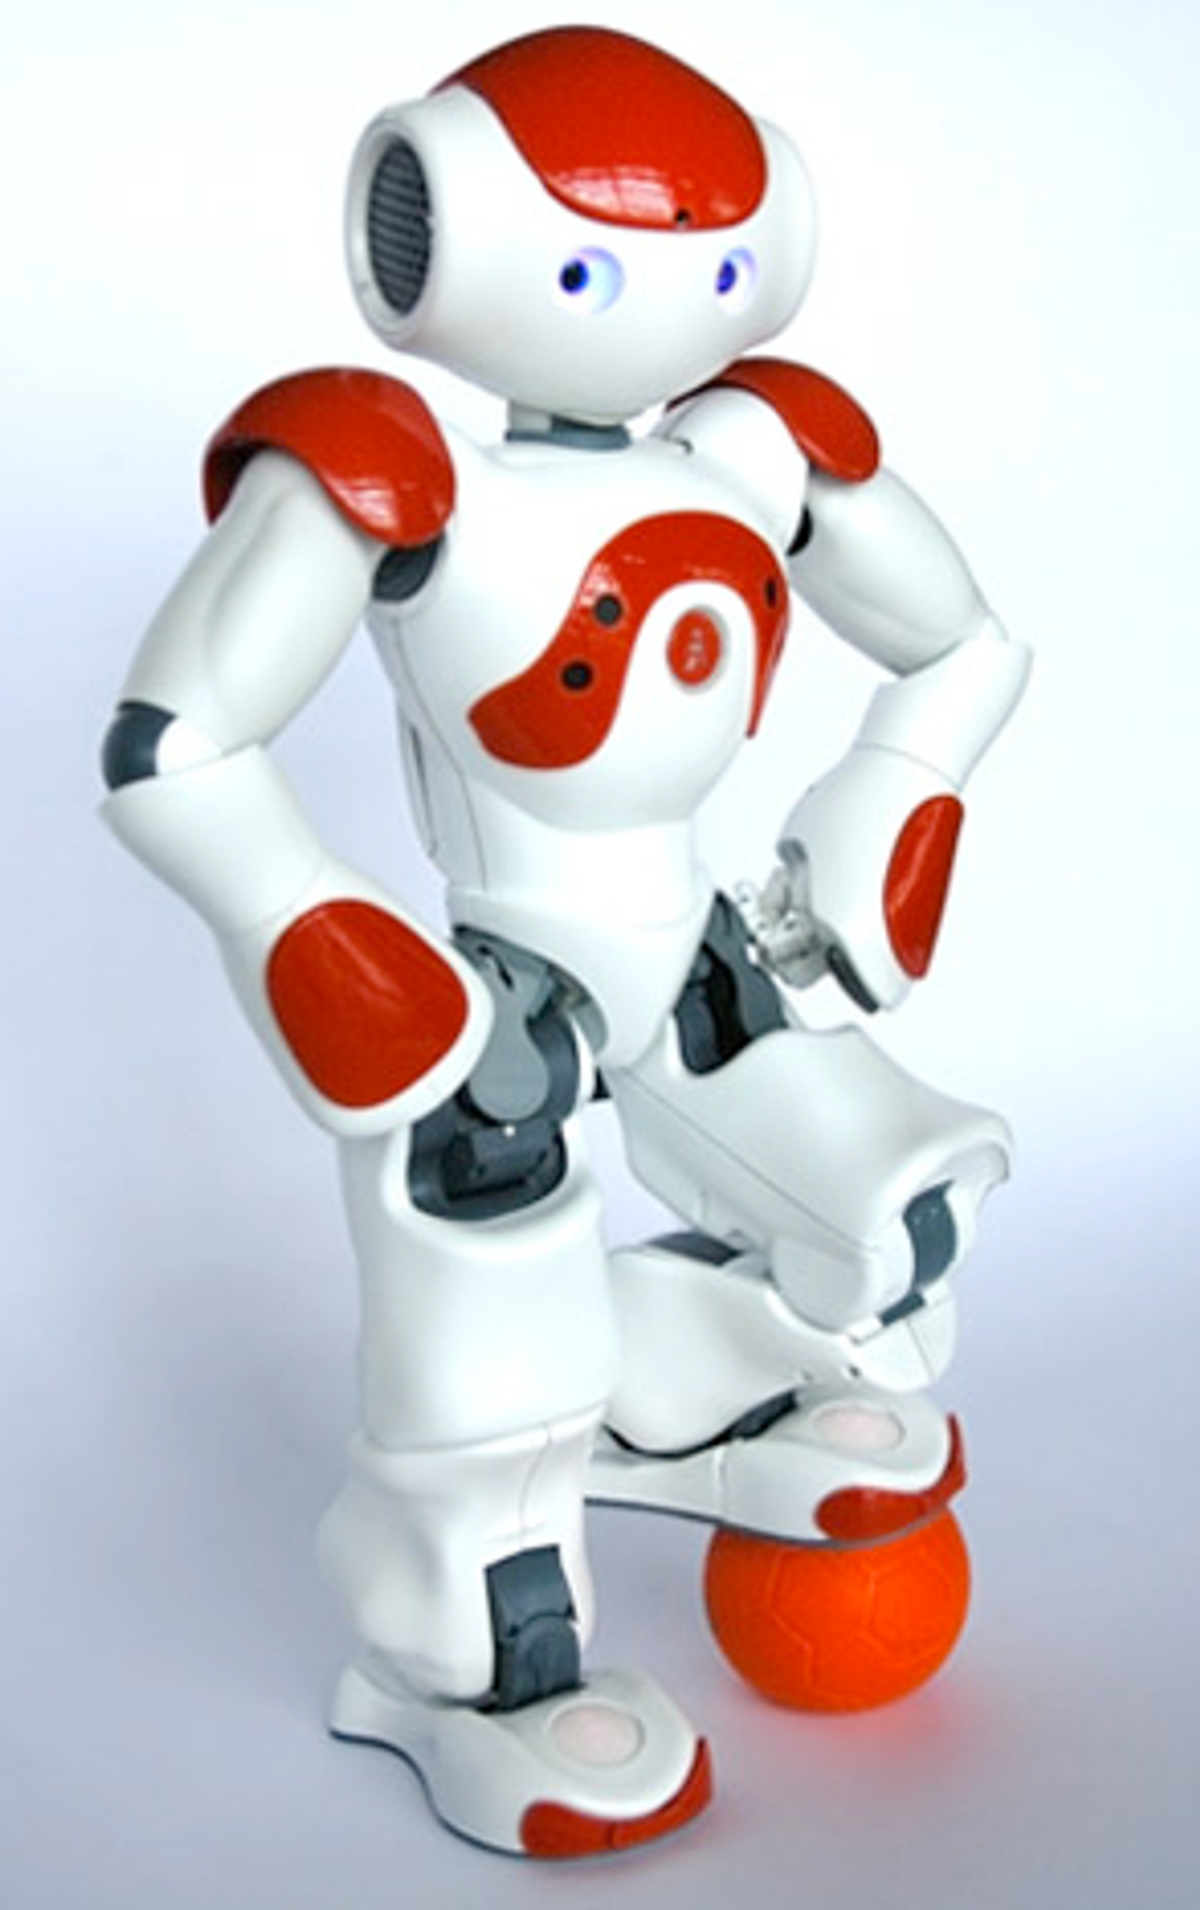 Aldebaran Robotics seeking beta-testers for its Nao humanoid robot